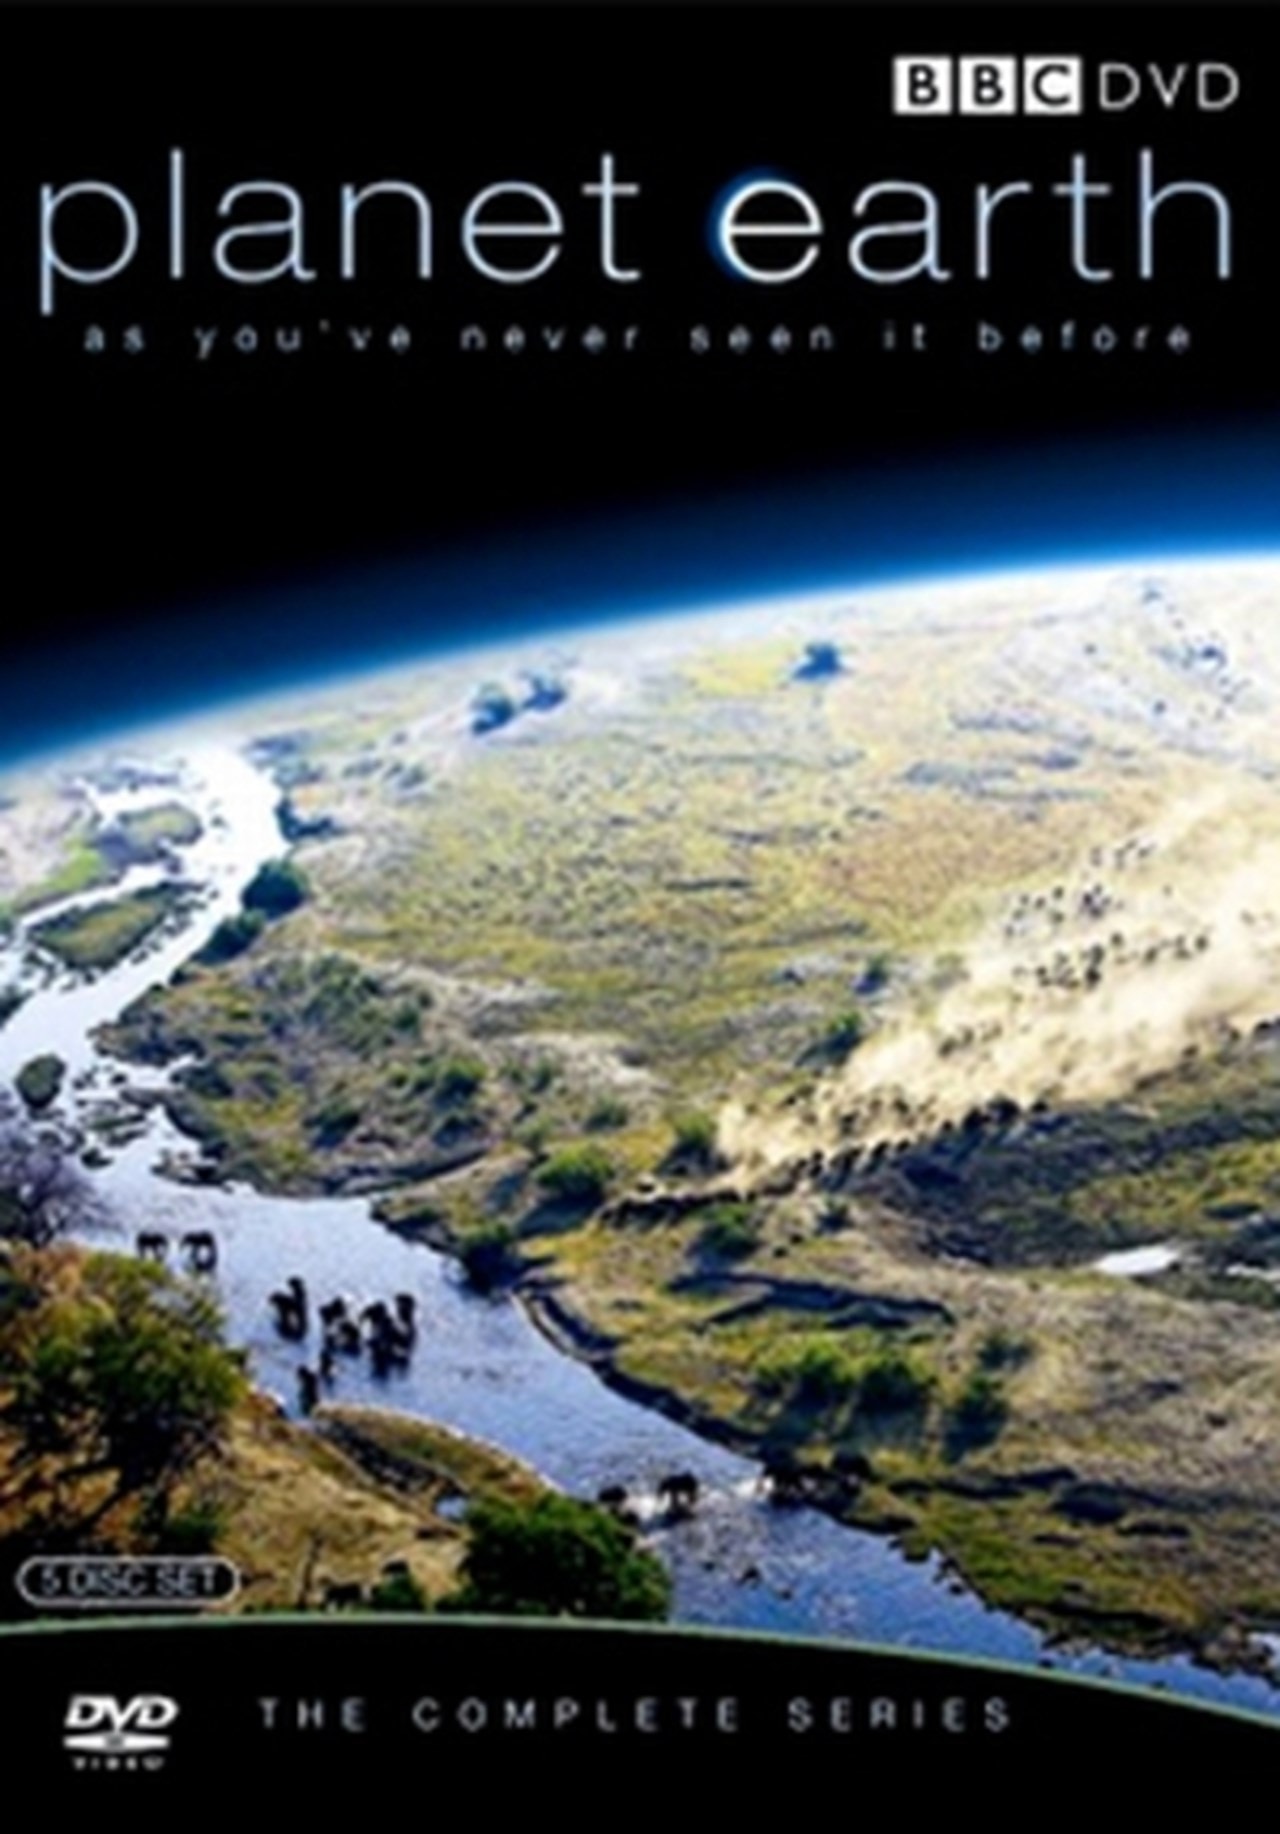 Planet Earth DVD Box Set Free Shipping Over HMV Store